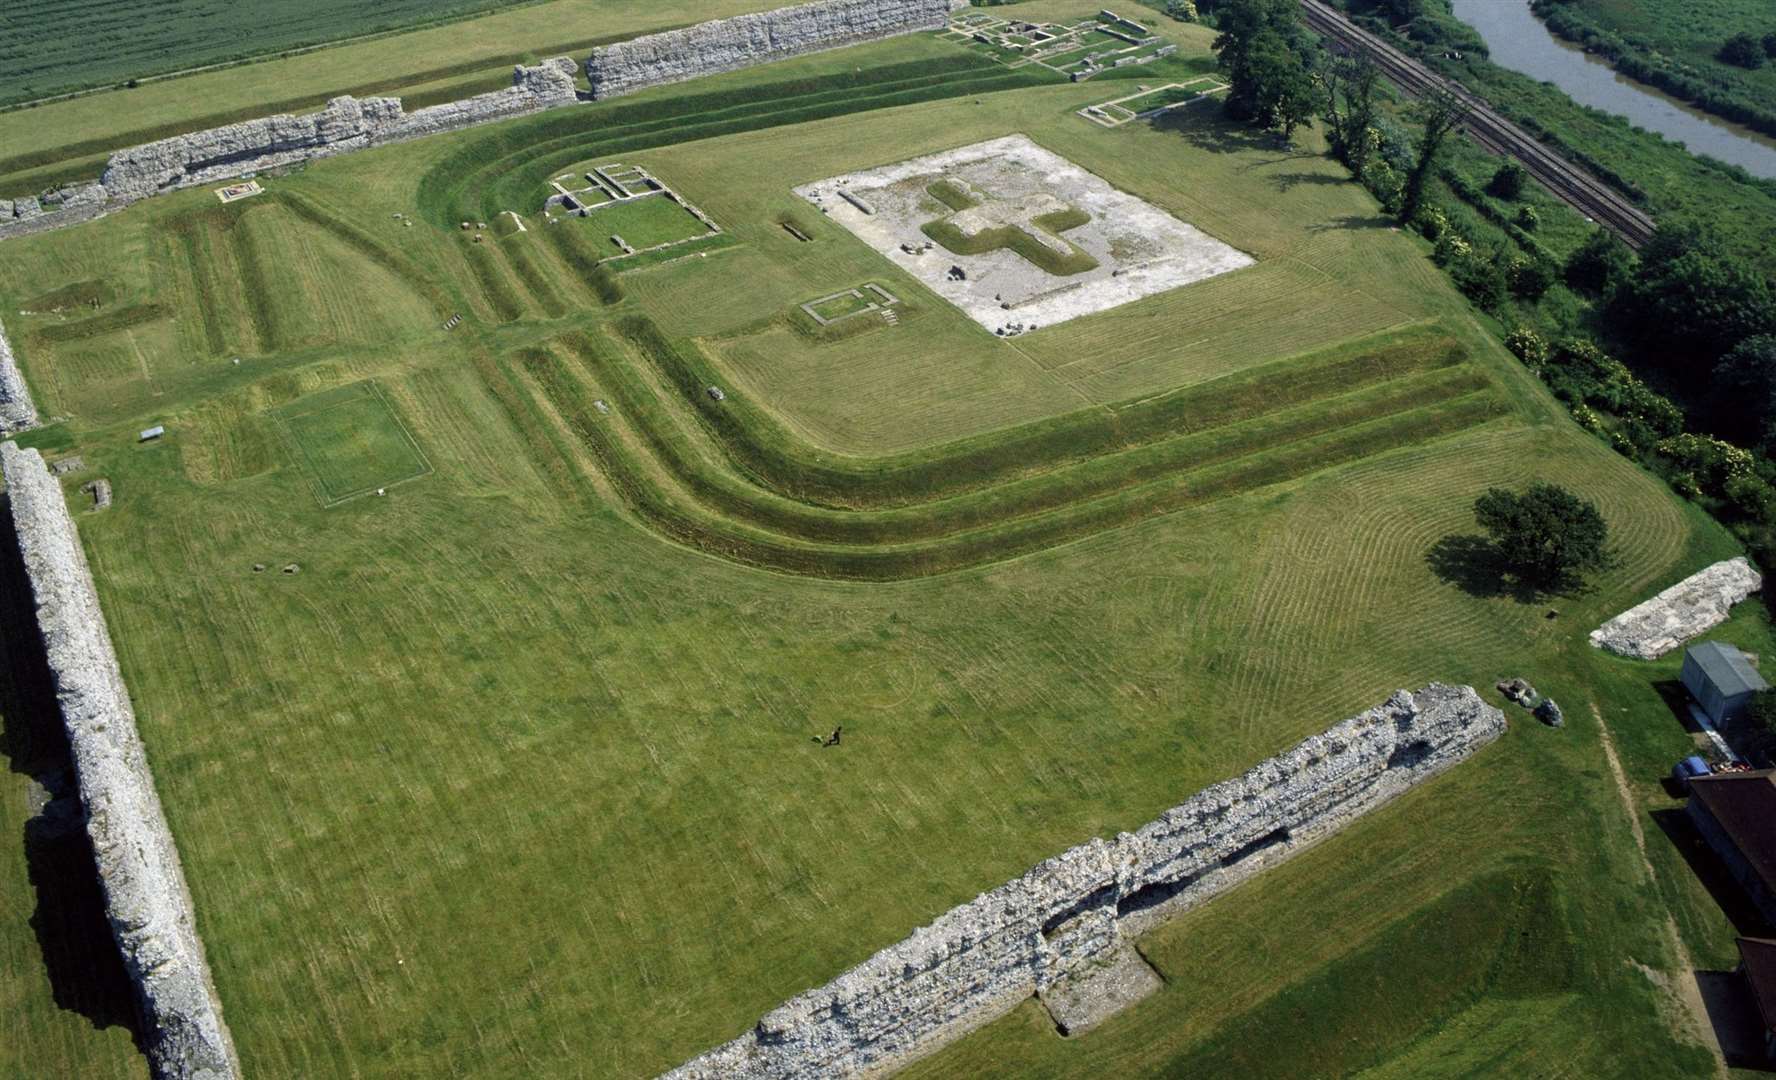 An aerial view of Richborough Roman Fort